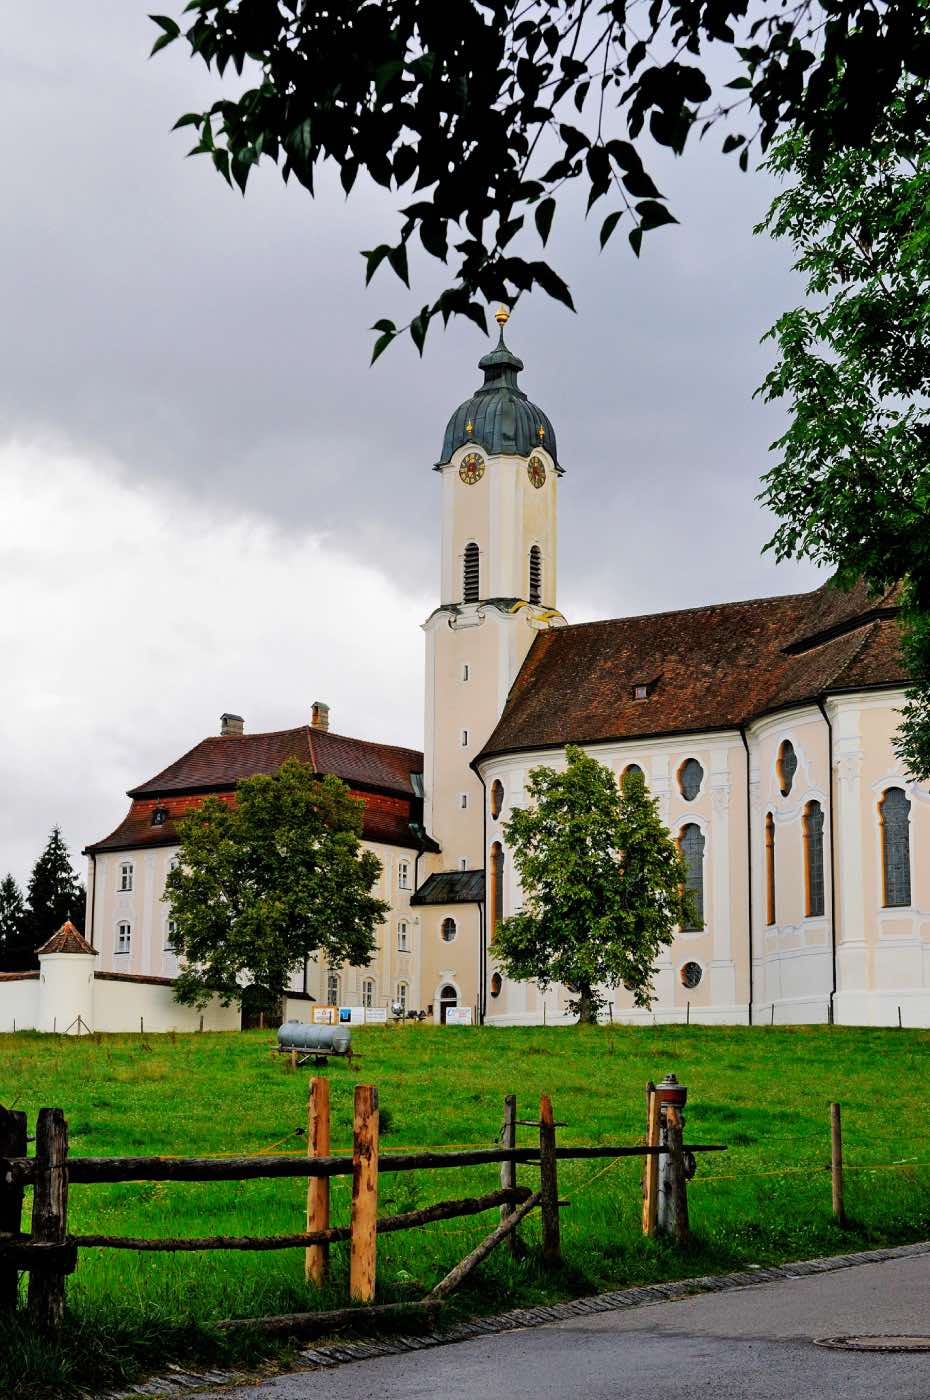 Iglesia de Wies, iglesia barroca alemana en el campo